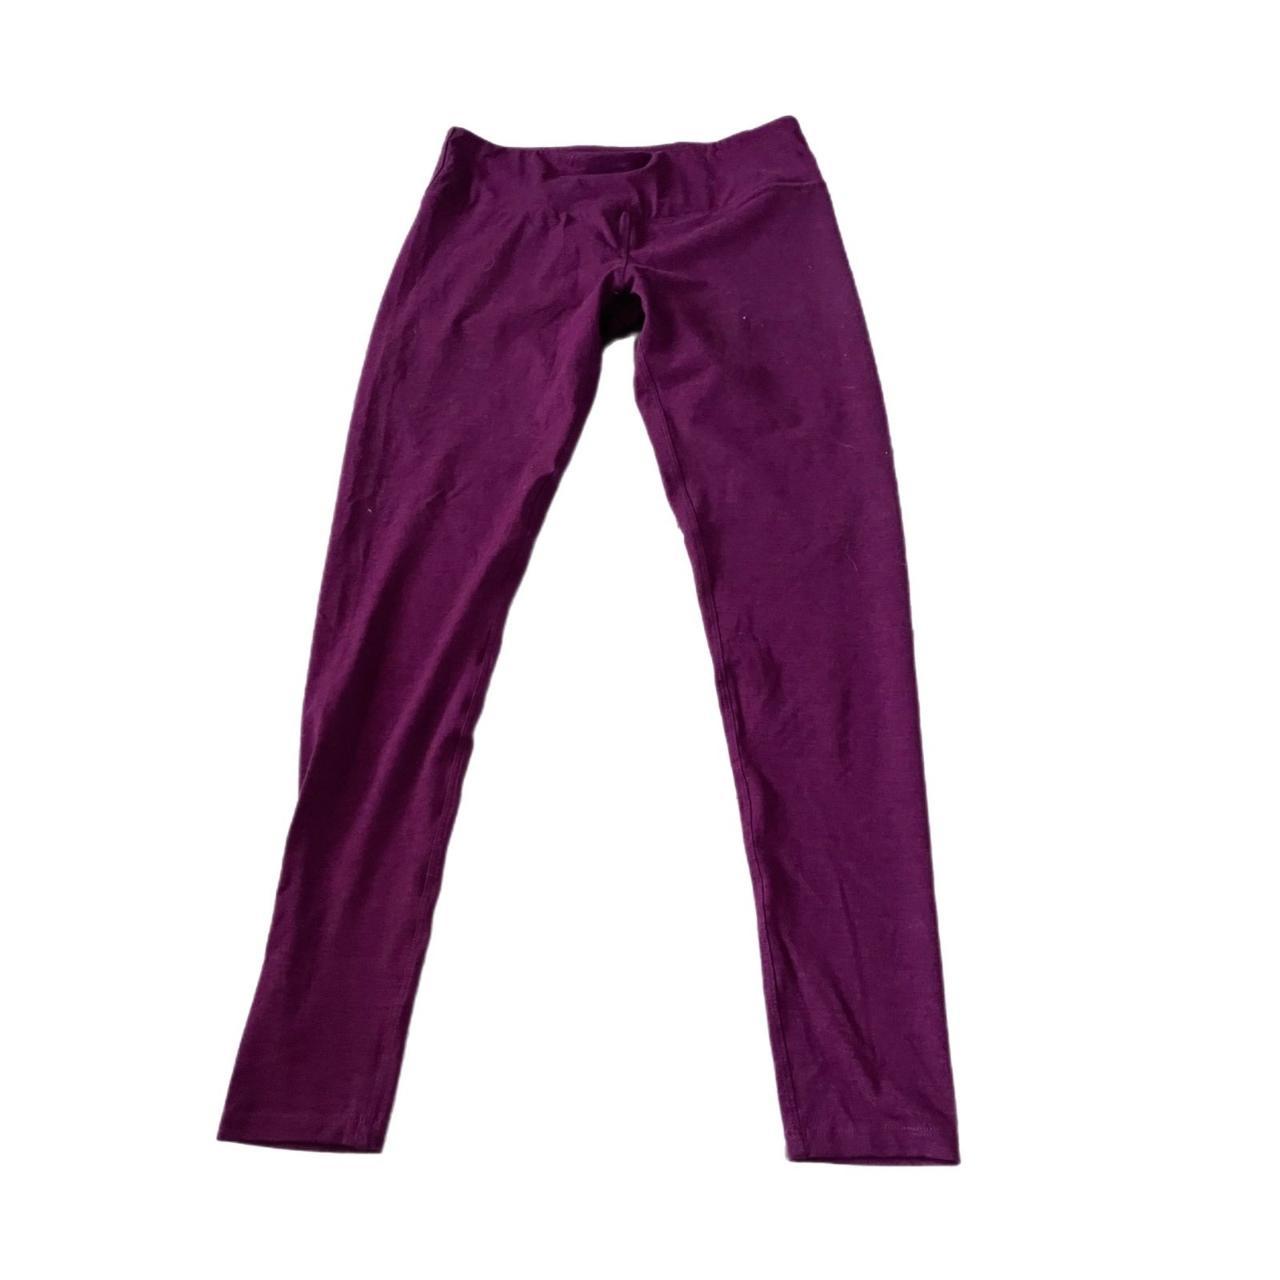 Kyodan purple athletic leggings •Size:medium - Depop